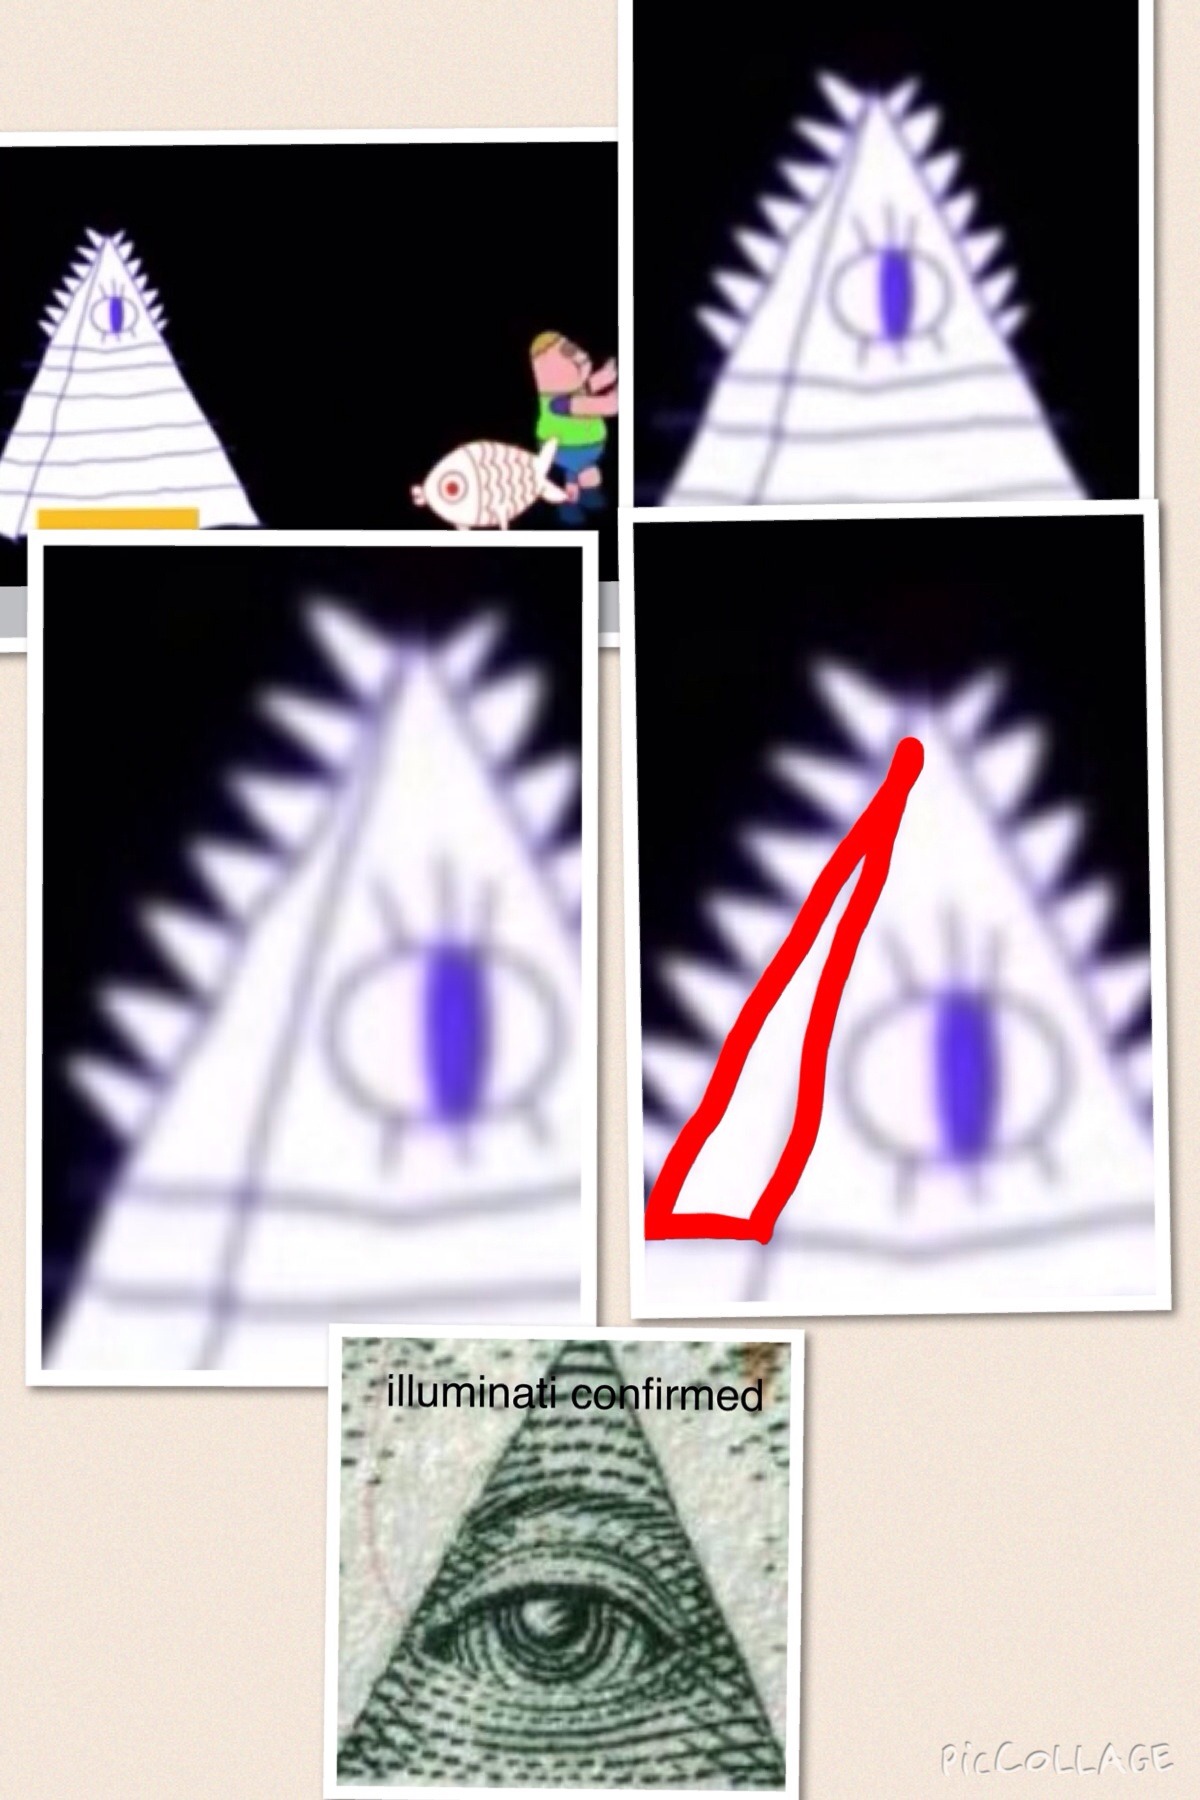 Original :o sígueme y te sigo... illuminati confirmed - meme